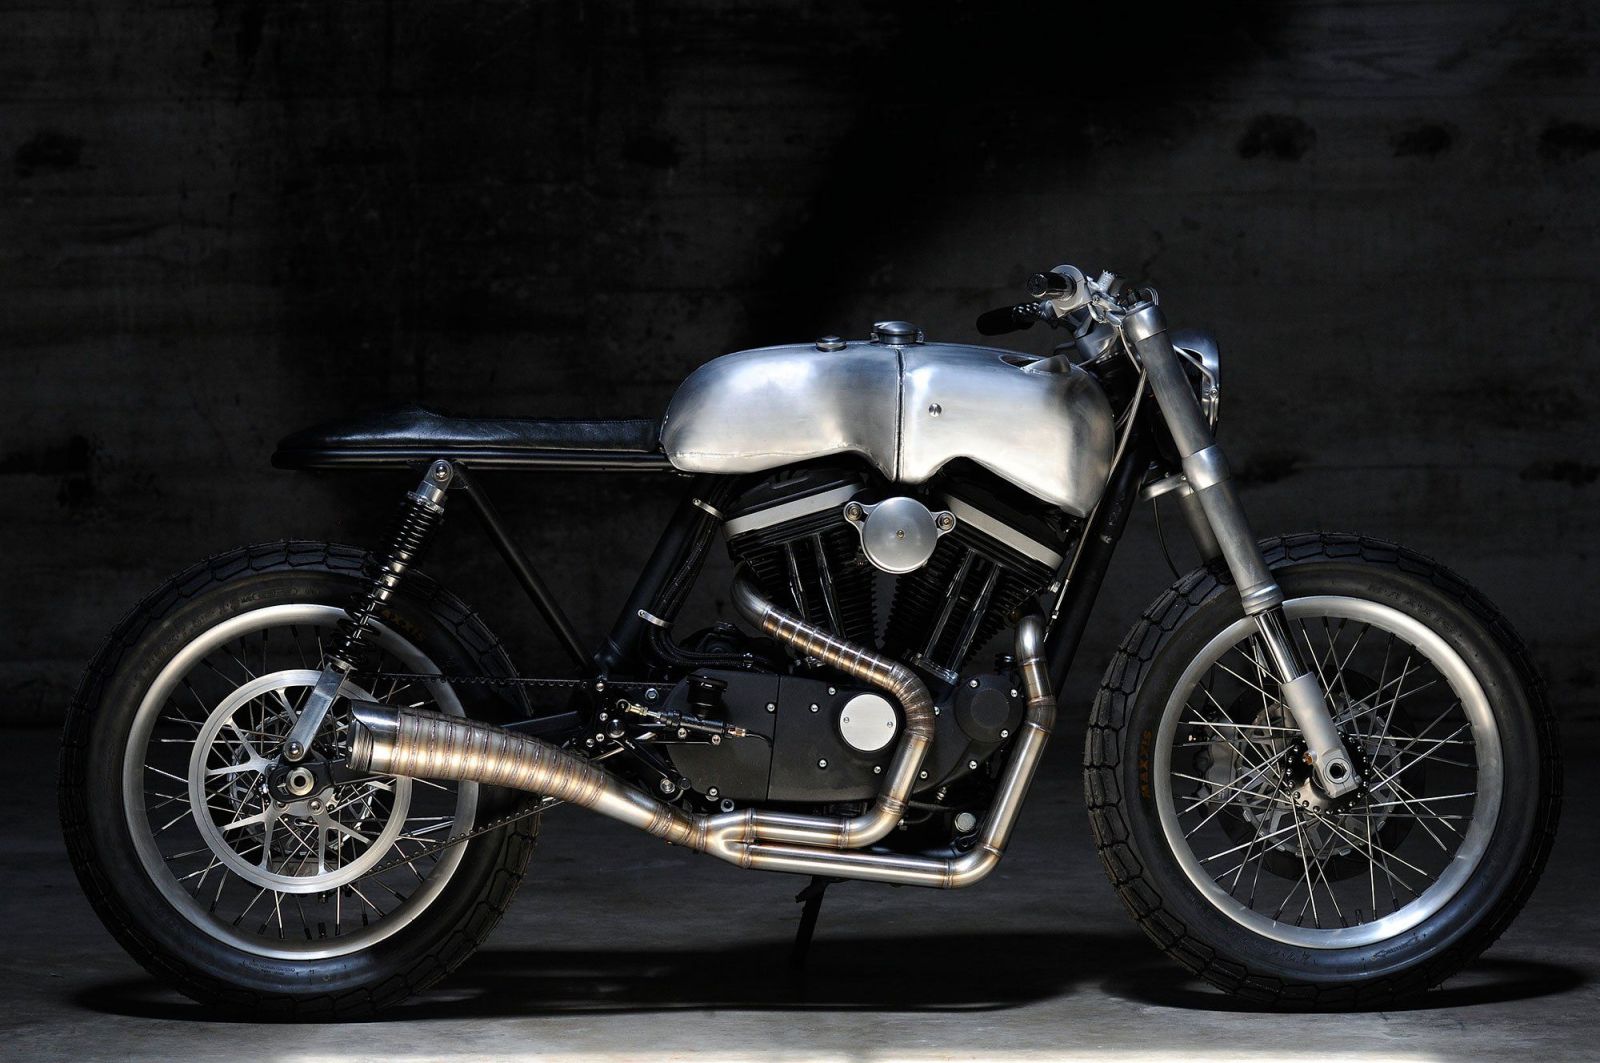 The Hardley custom Harley-Davidson